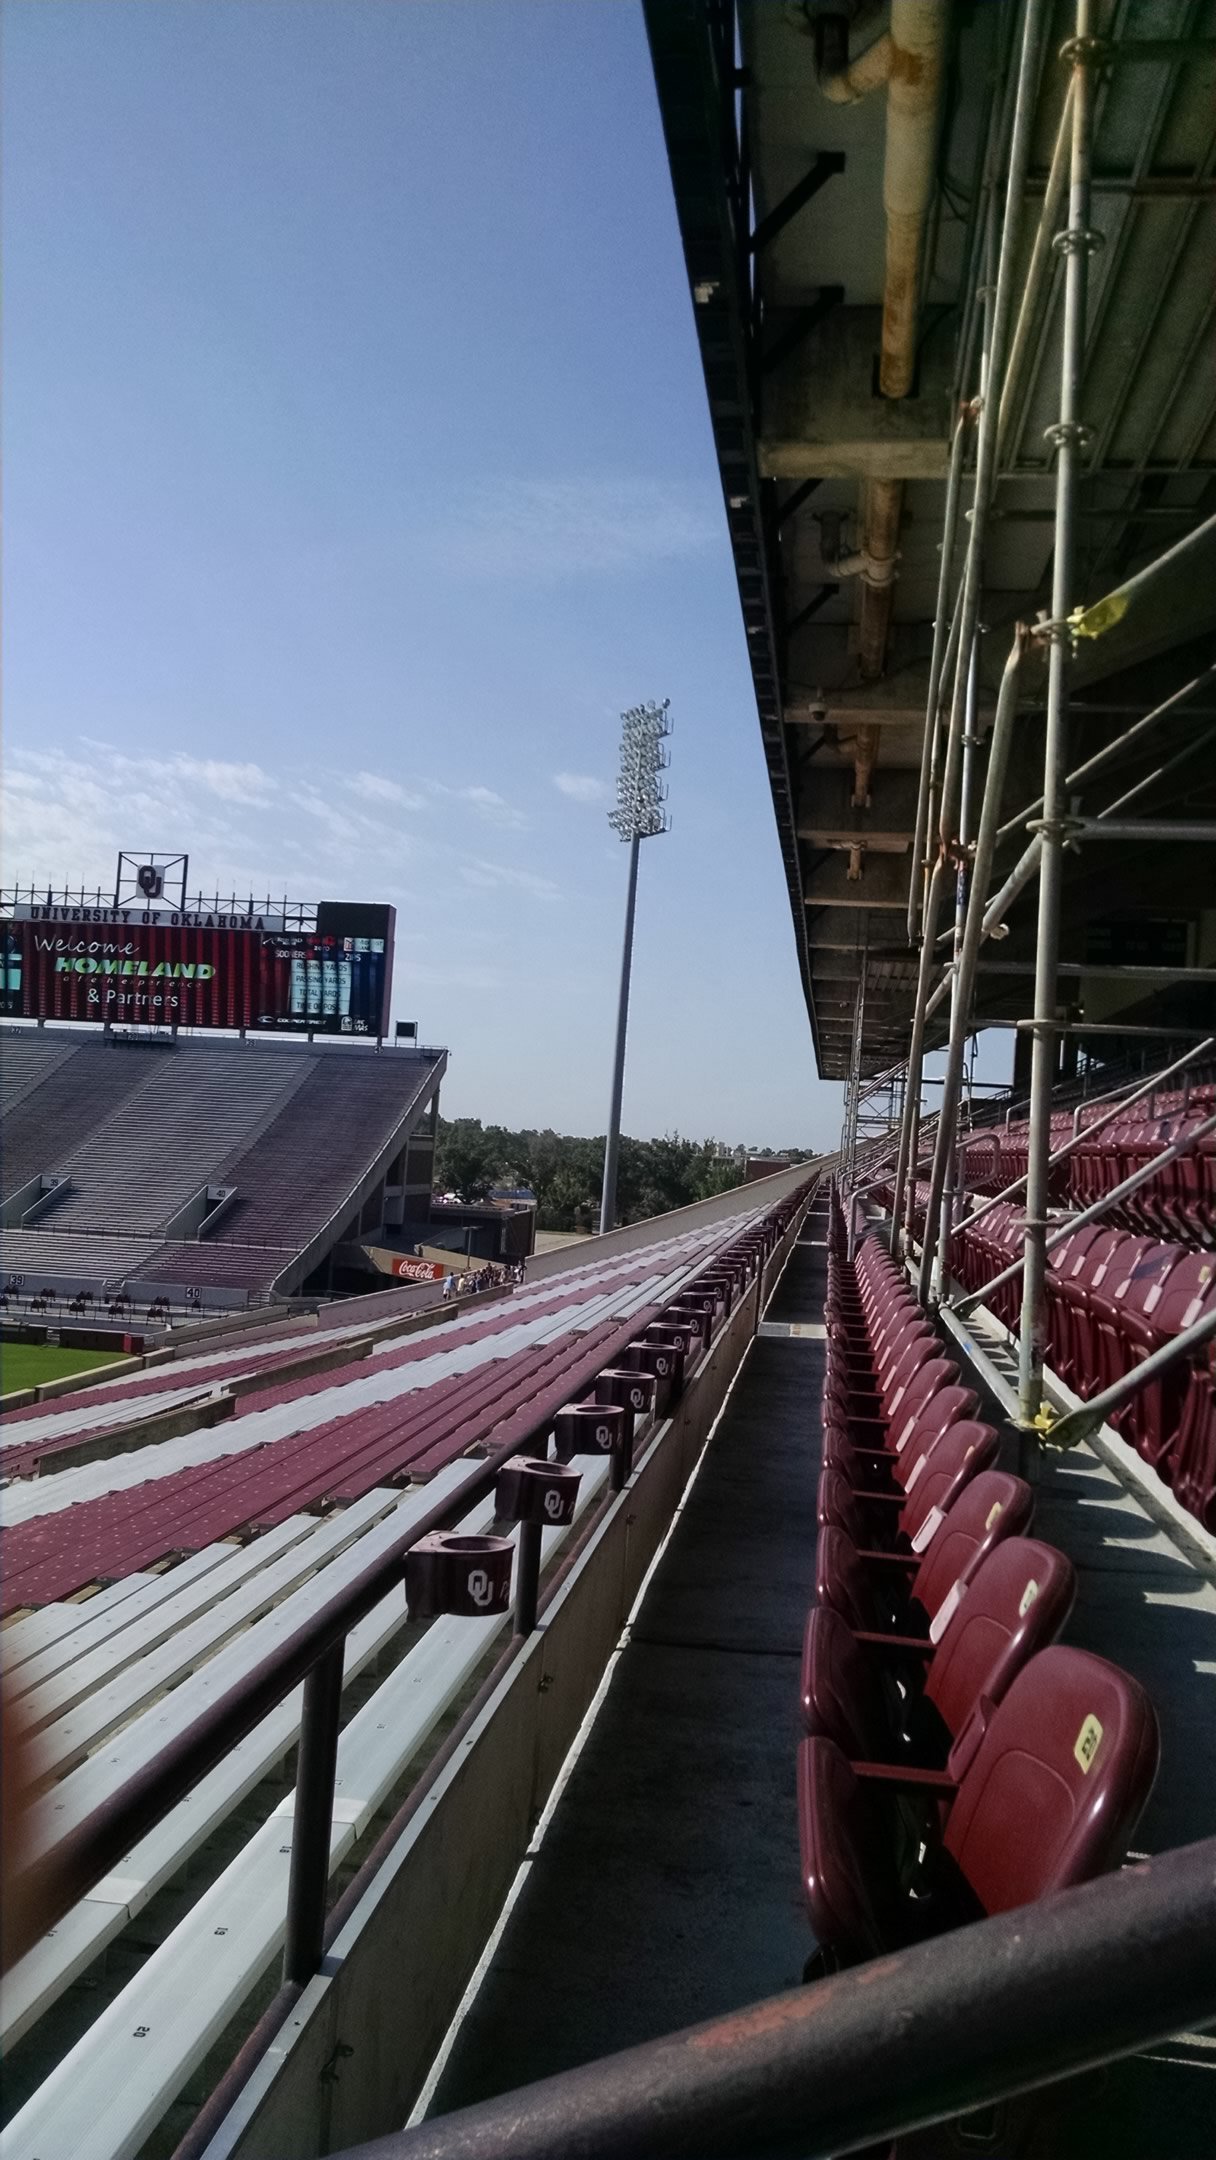 Oklahoma University Stadium Seating Chart